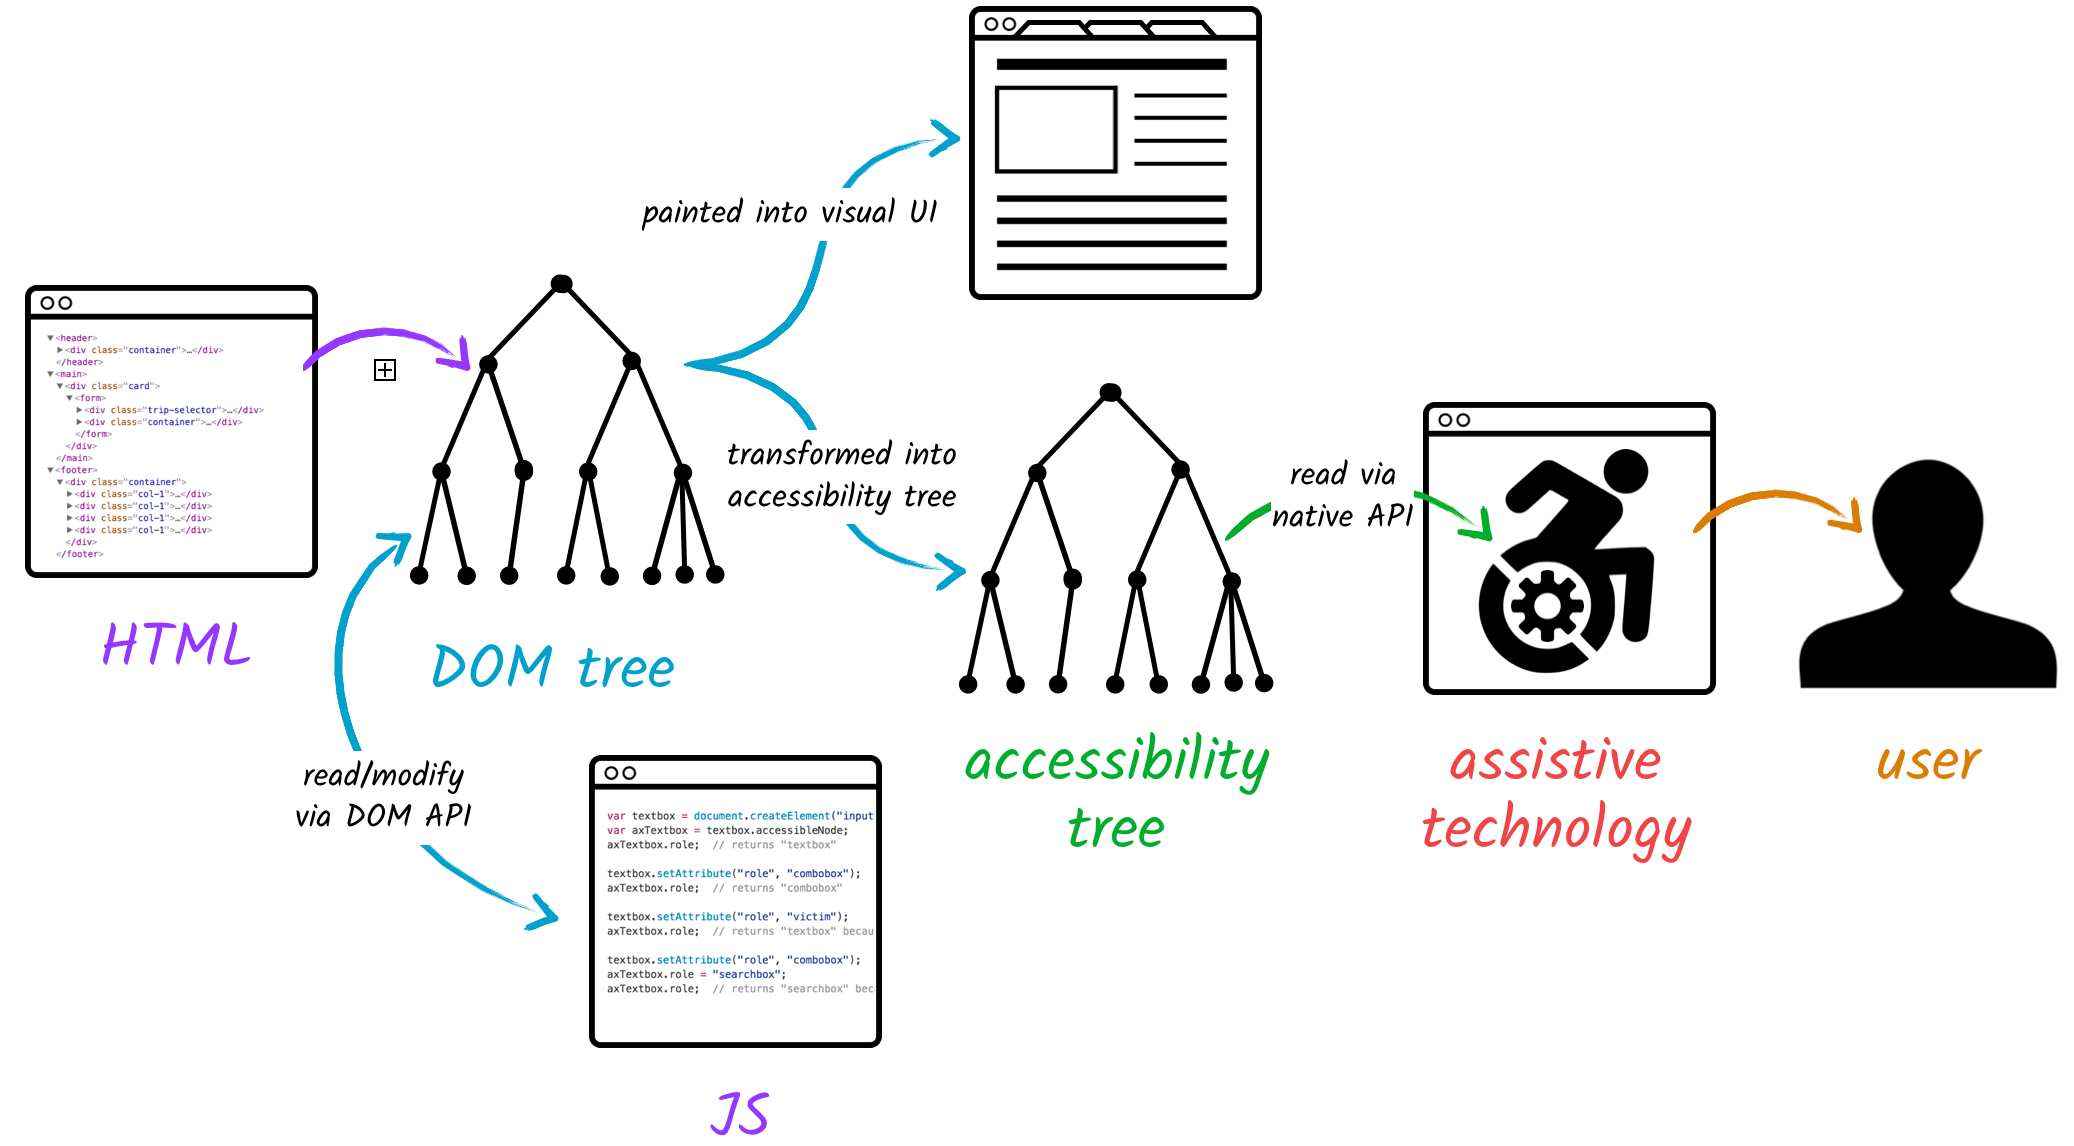 HTML translated into DOM tree translated into visual UI and accessibility tree.